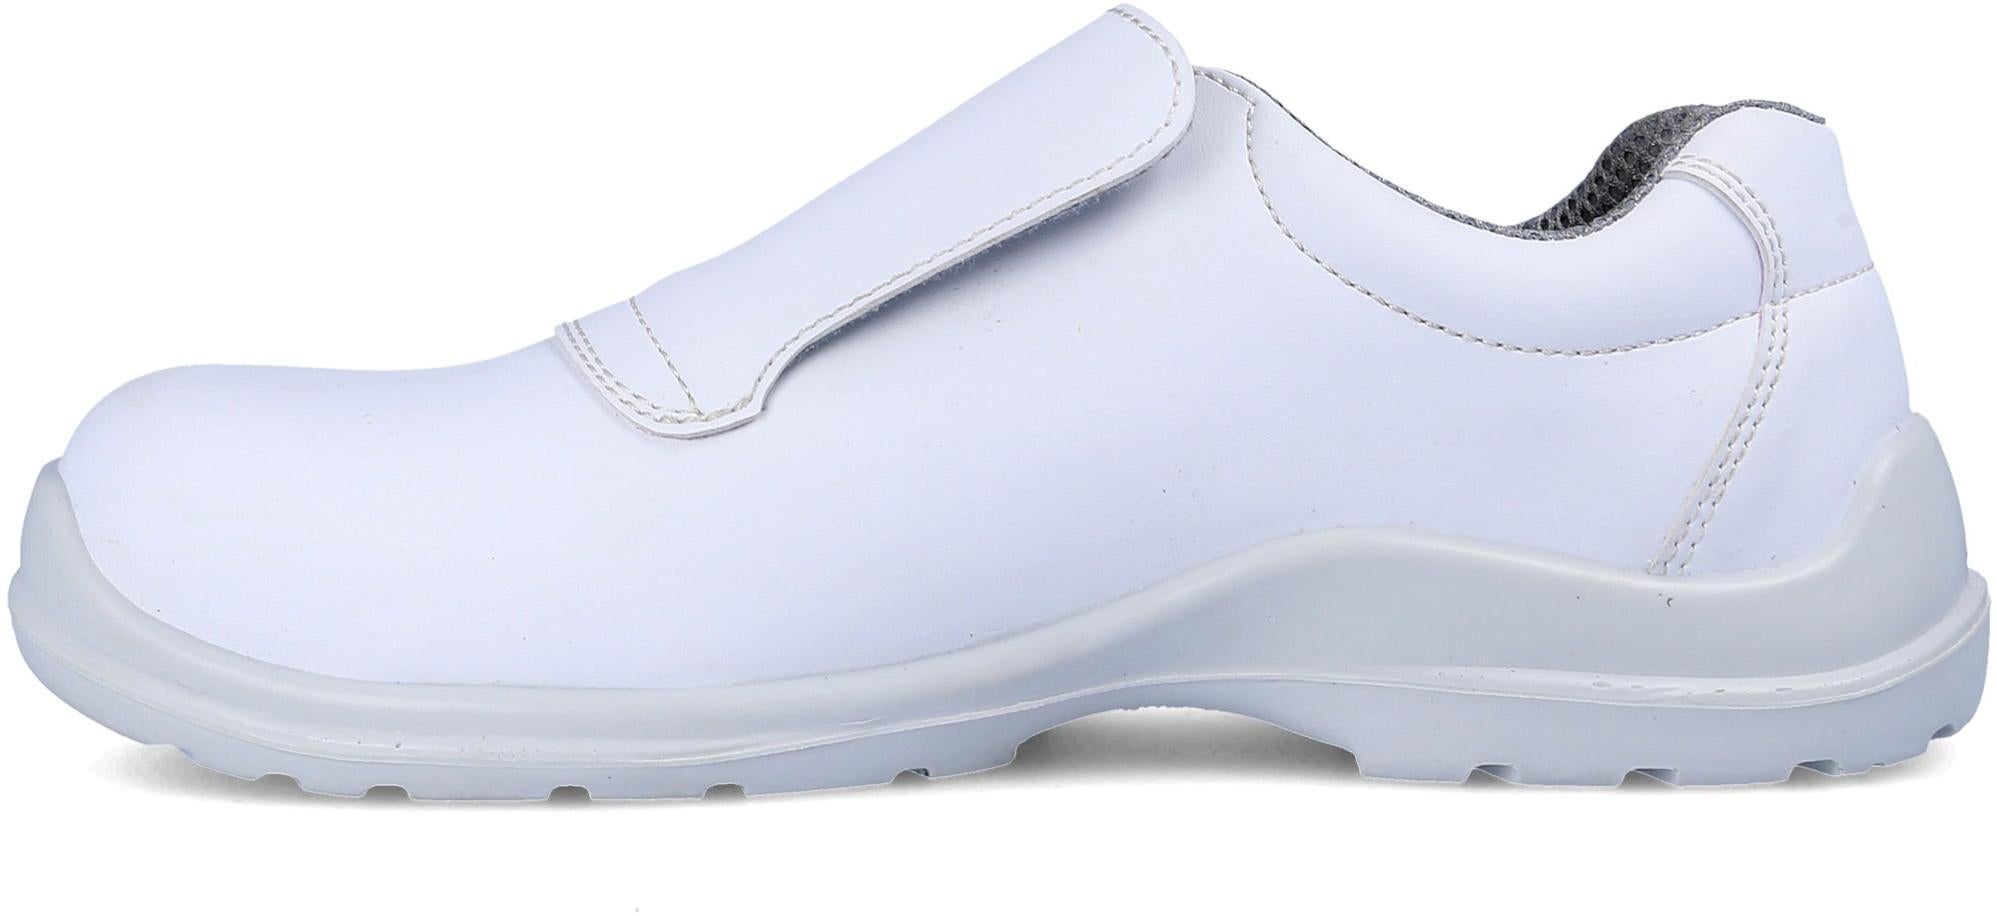 Zapato seguridad paredes, arzak microfibra blanco, talla 43